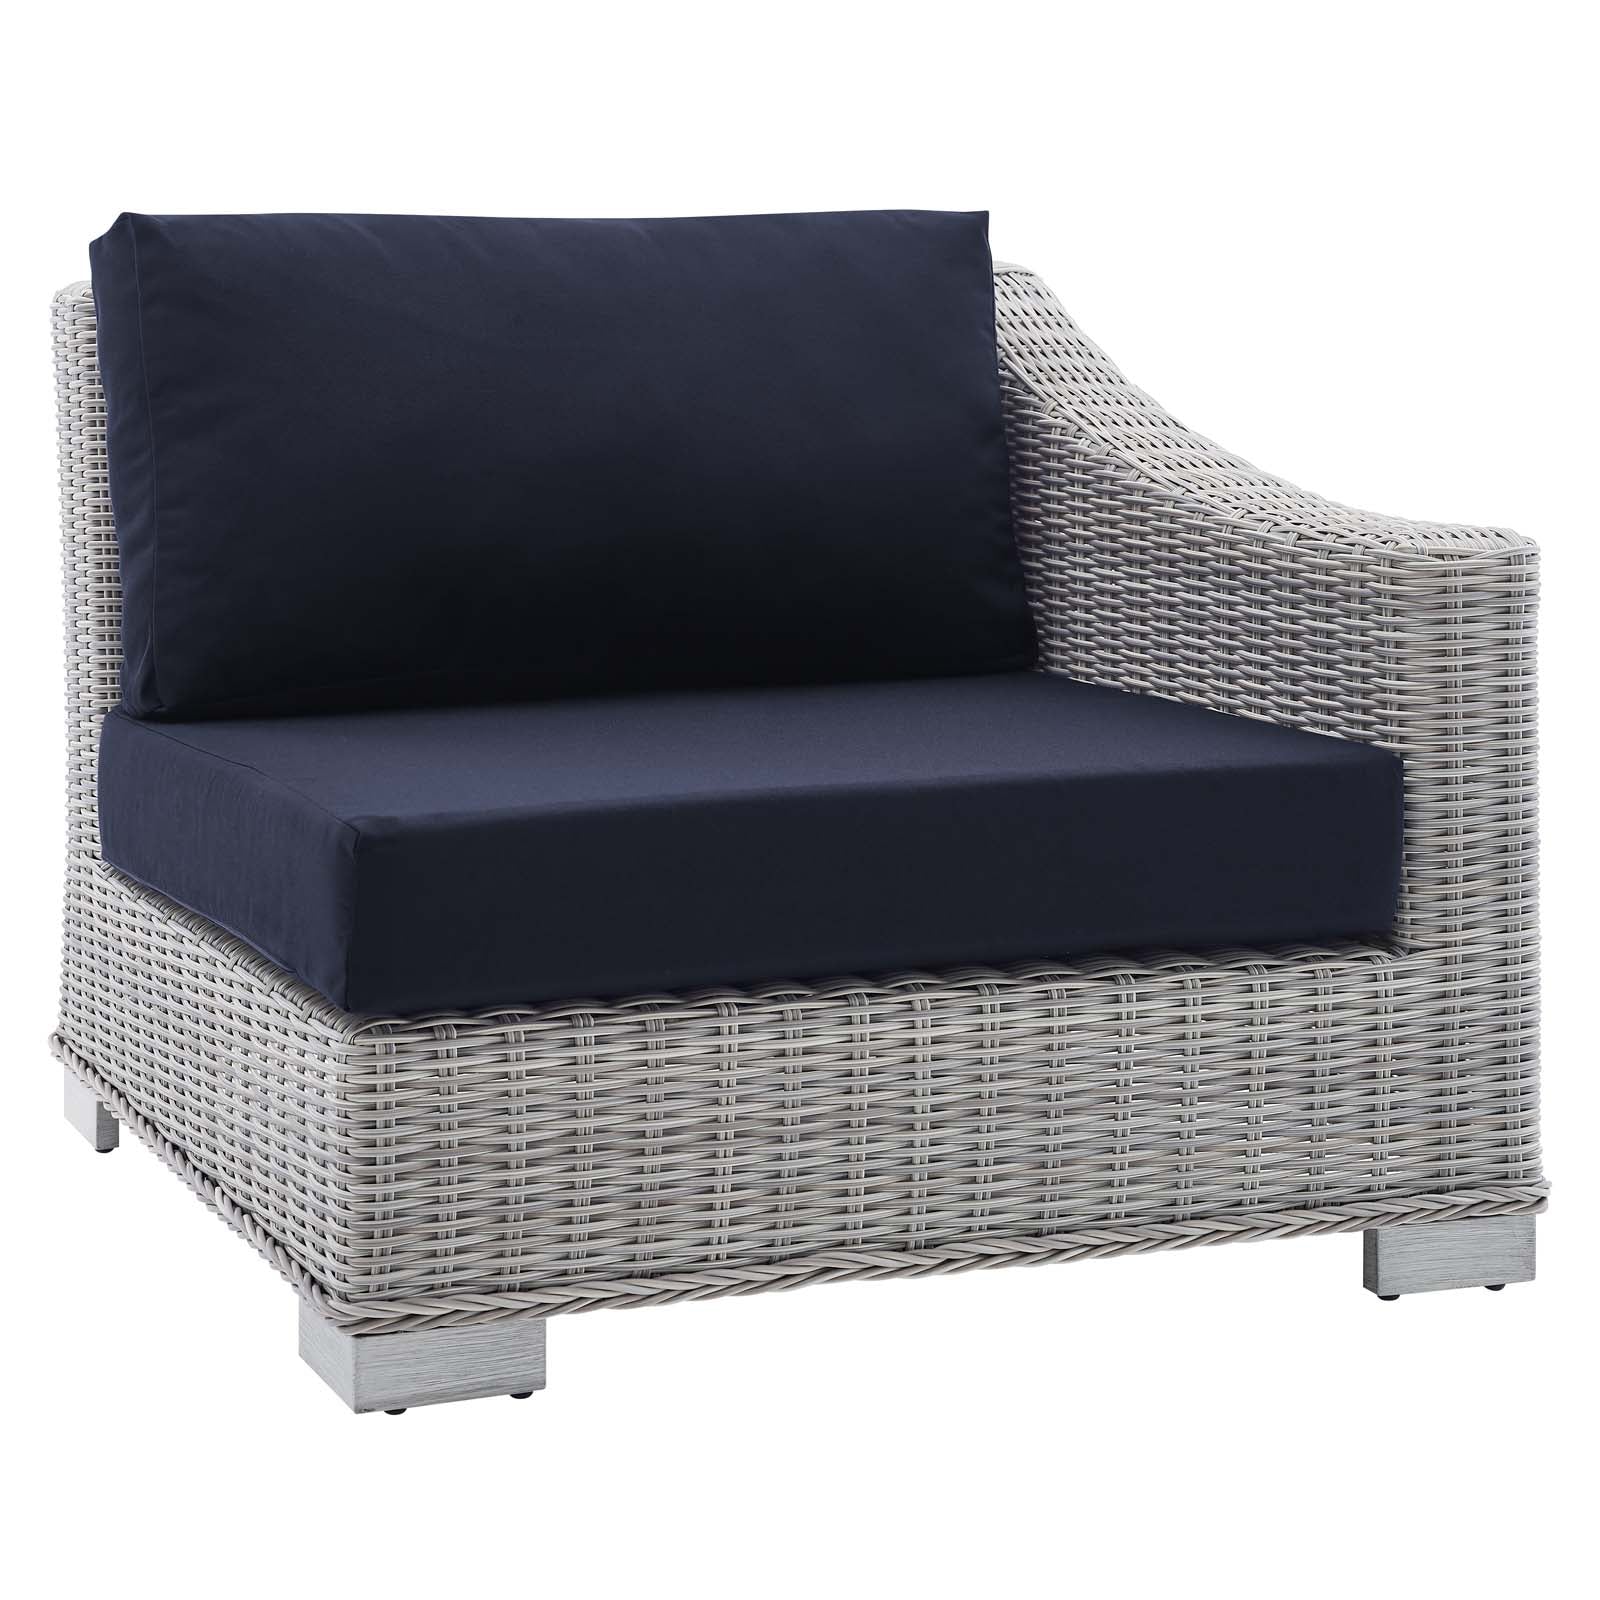 Conway Sunbrella® Outdoor Patio Wicker Rattan 6-Piece Sectional Sofa Set - East Shore Modern Home Furnishings